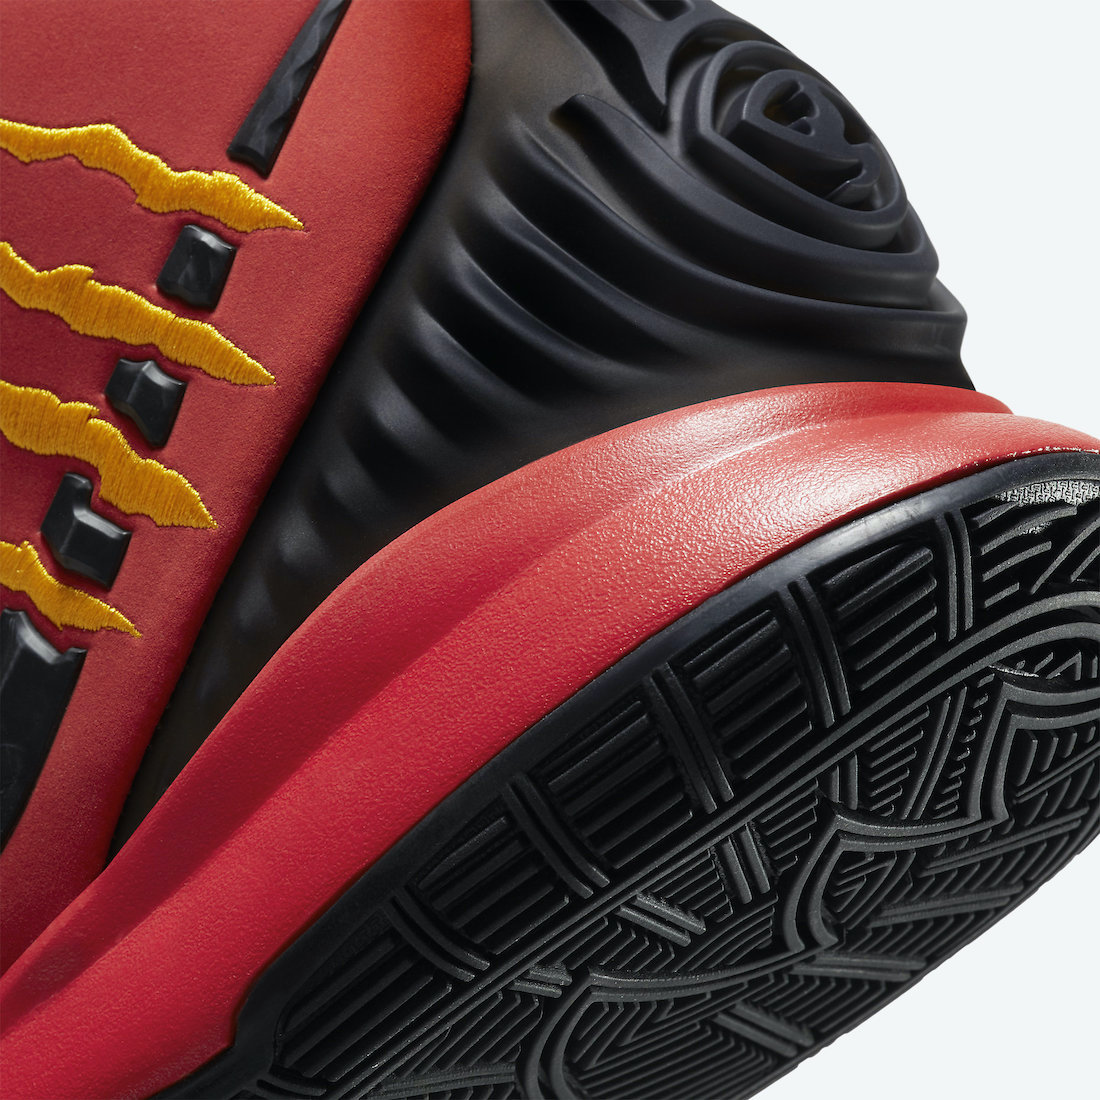 Nike Kyrie 6 Bruce Lee Comet Red CJ1290-600 Release Date